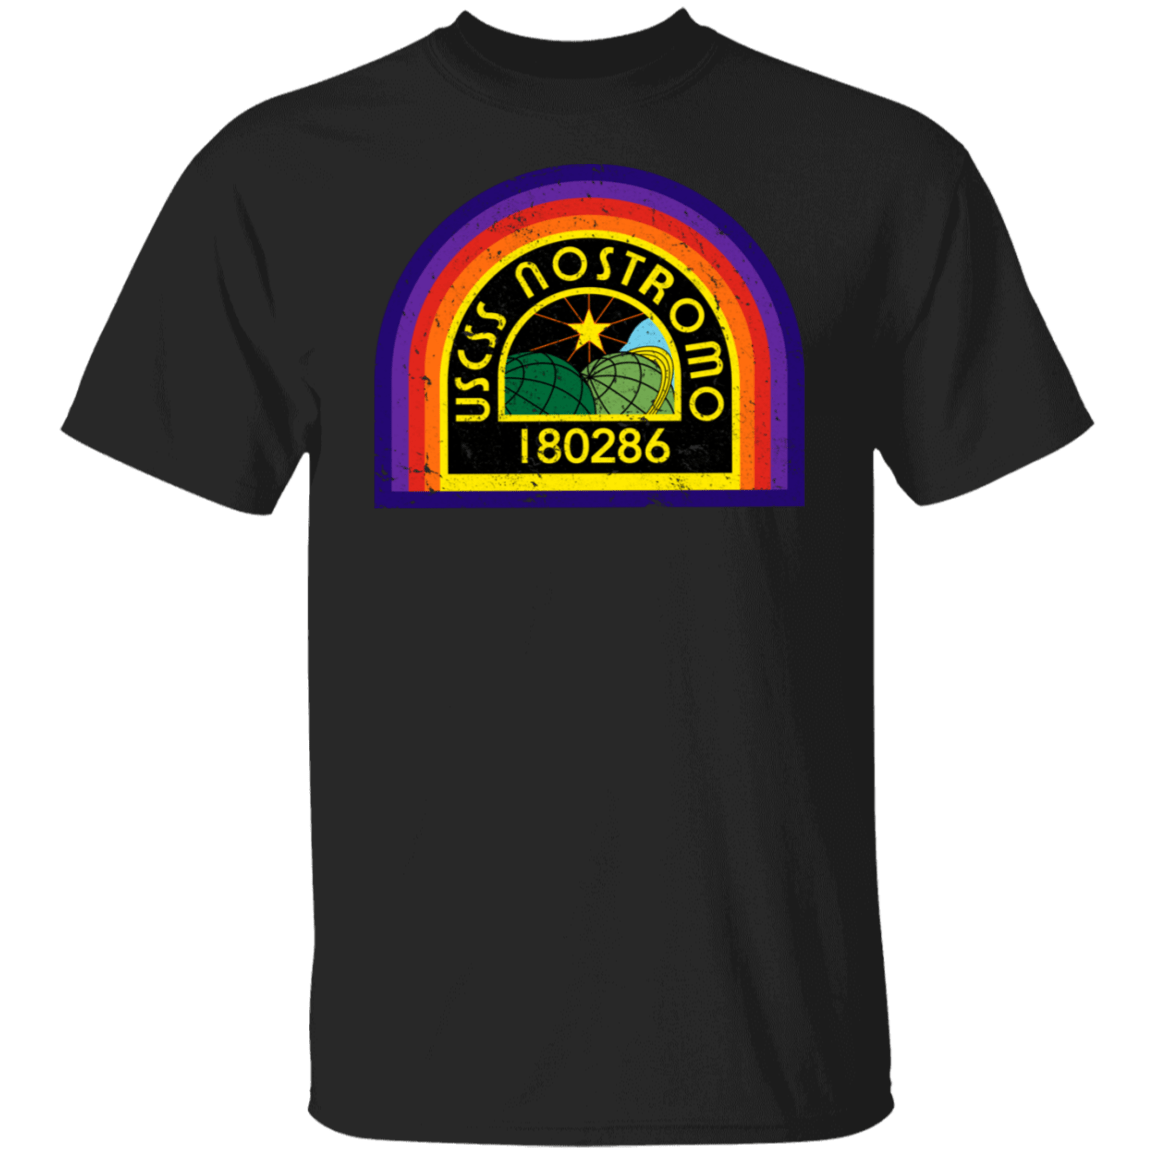 T-Shirts Black / S USCSS Nostromo T-Shirt